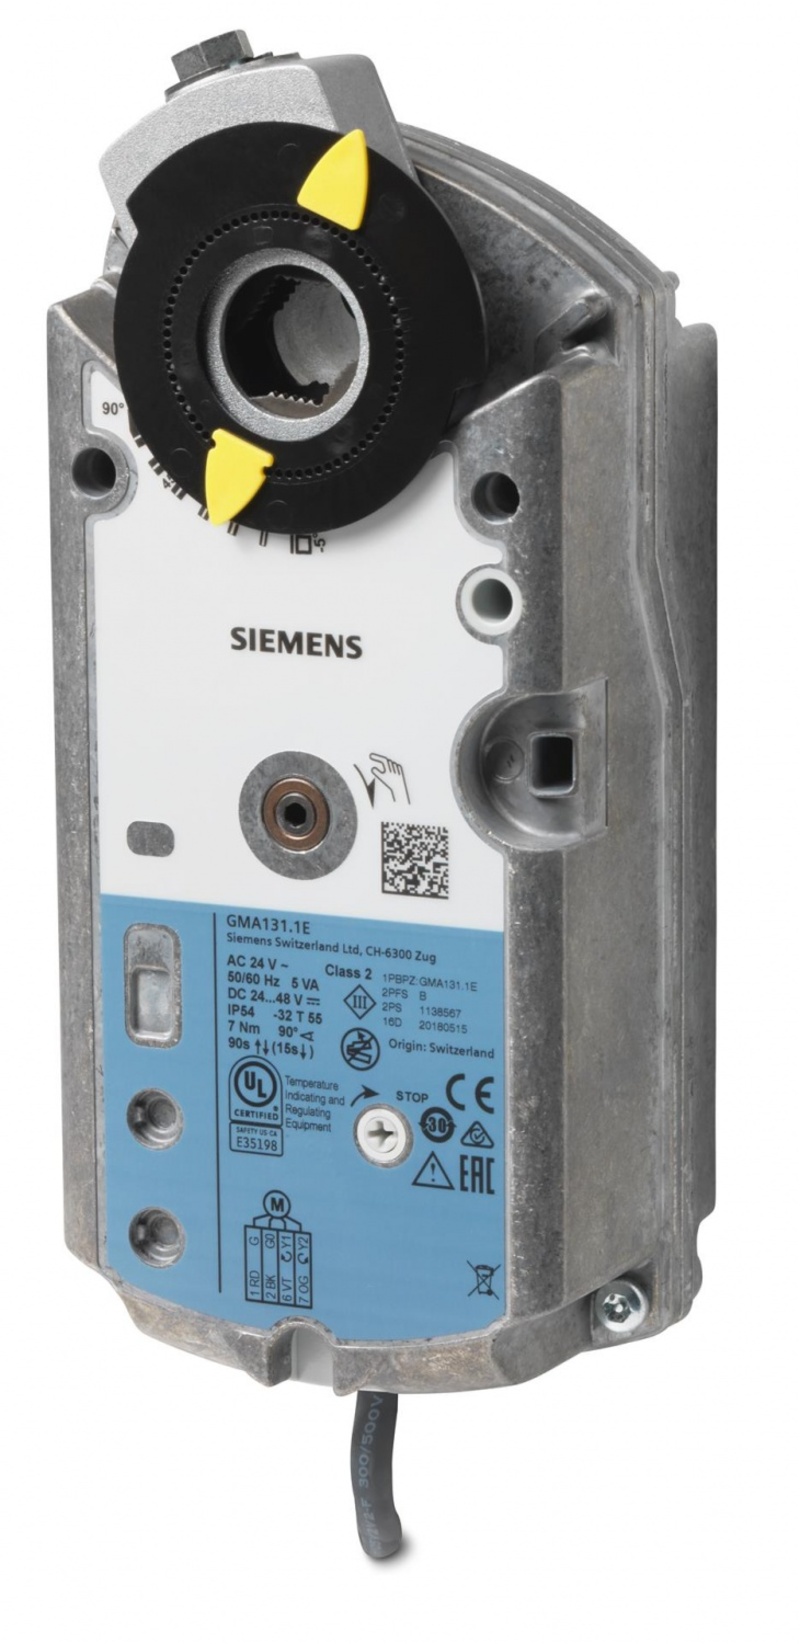 GMA Siemens: особенности и характеристики электроприводов